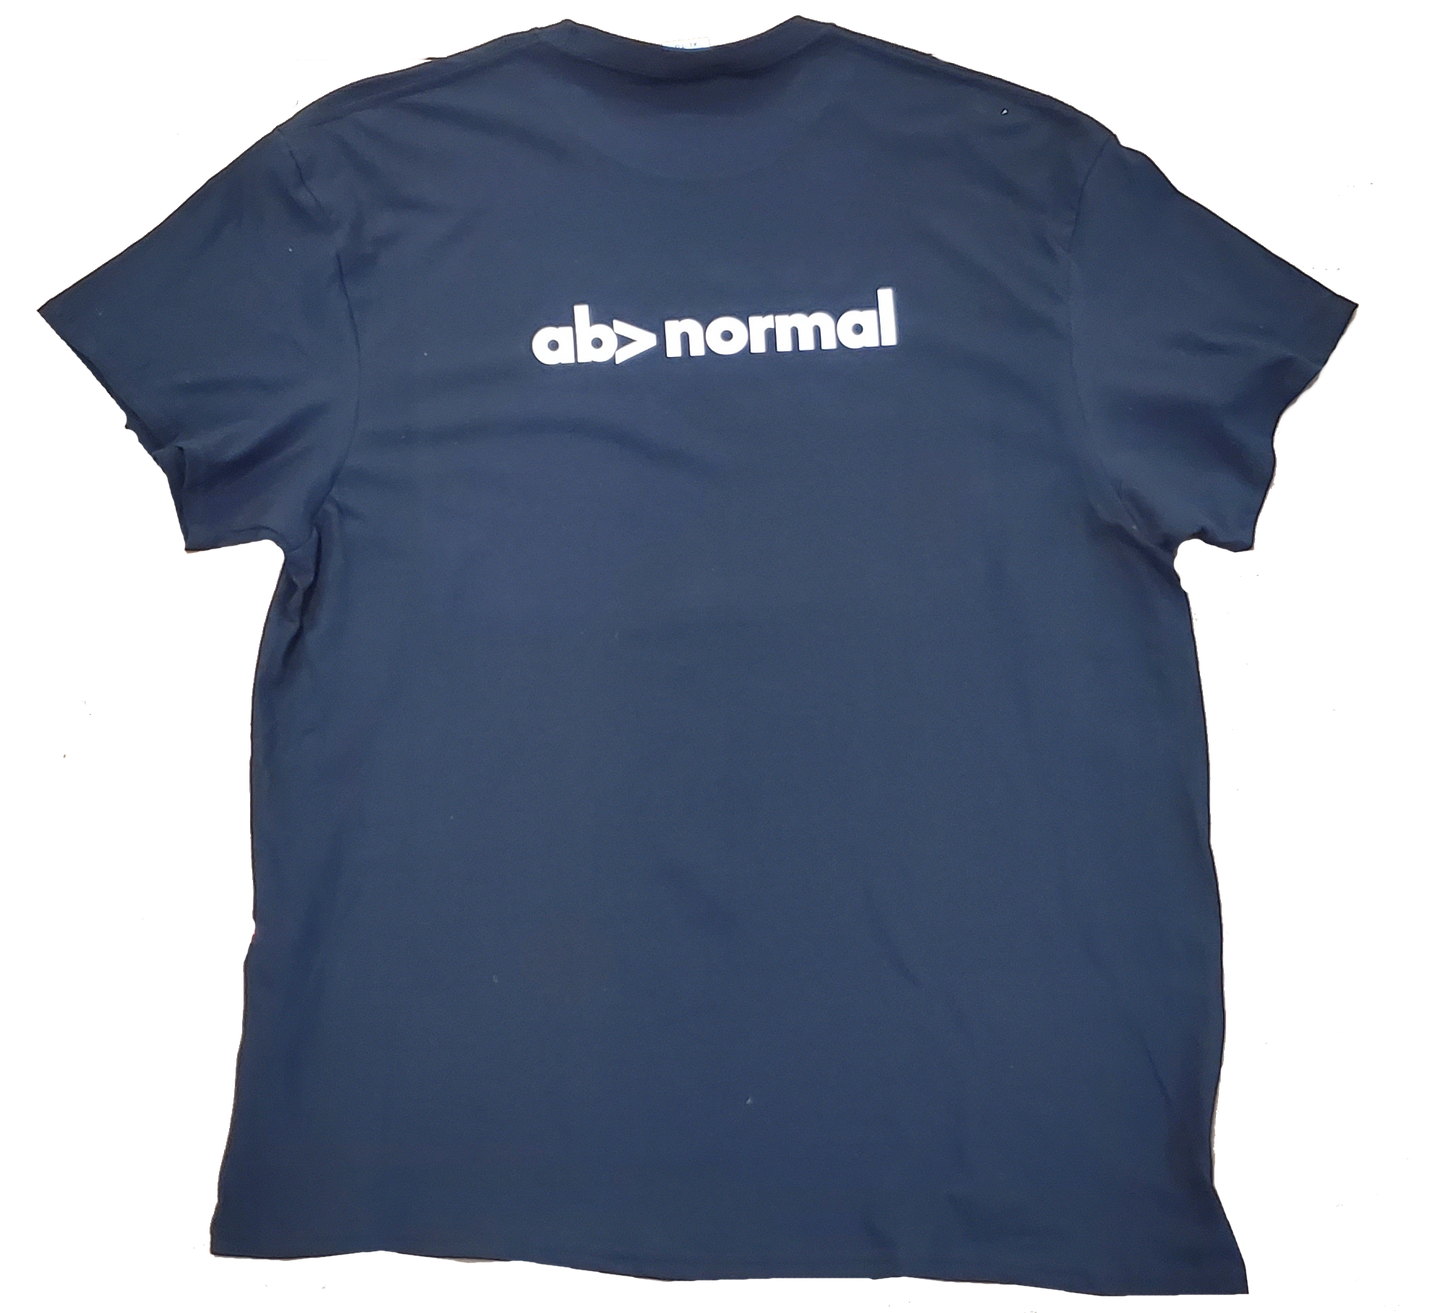 AB>Normal - Tee